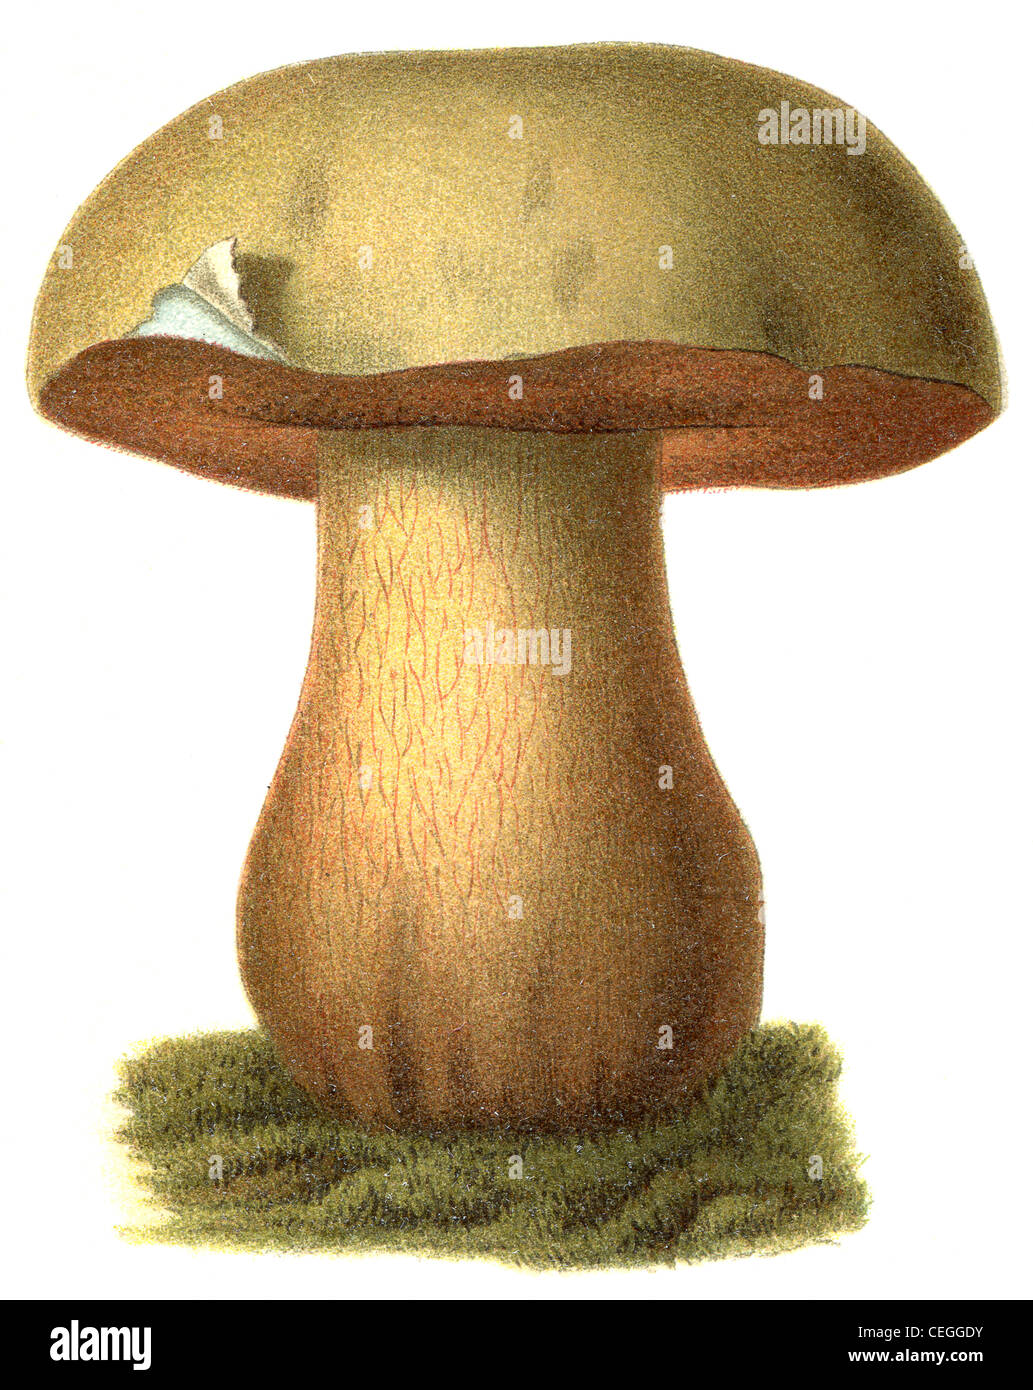 Poisonous mushroom Boletus satanas. Publication of the book 'Meyers Konversations-Lexikon', Volume 7, Leipzig, Germany, 1910 Stock Photo